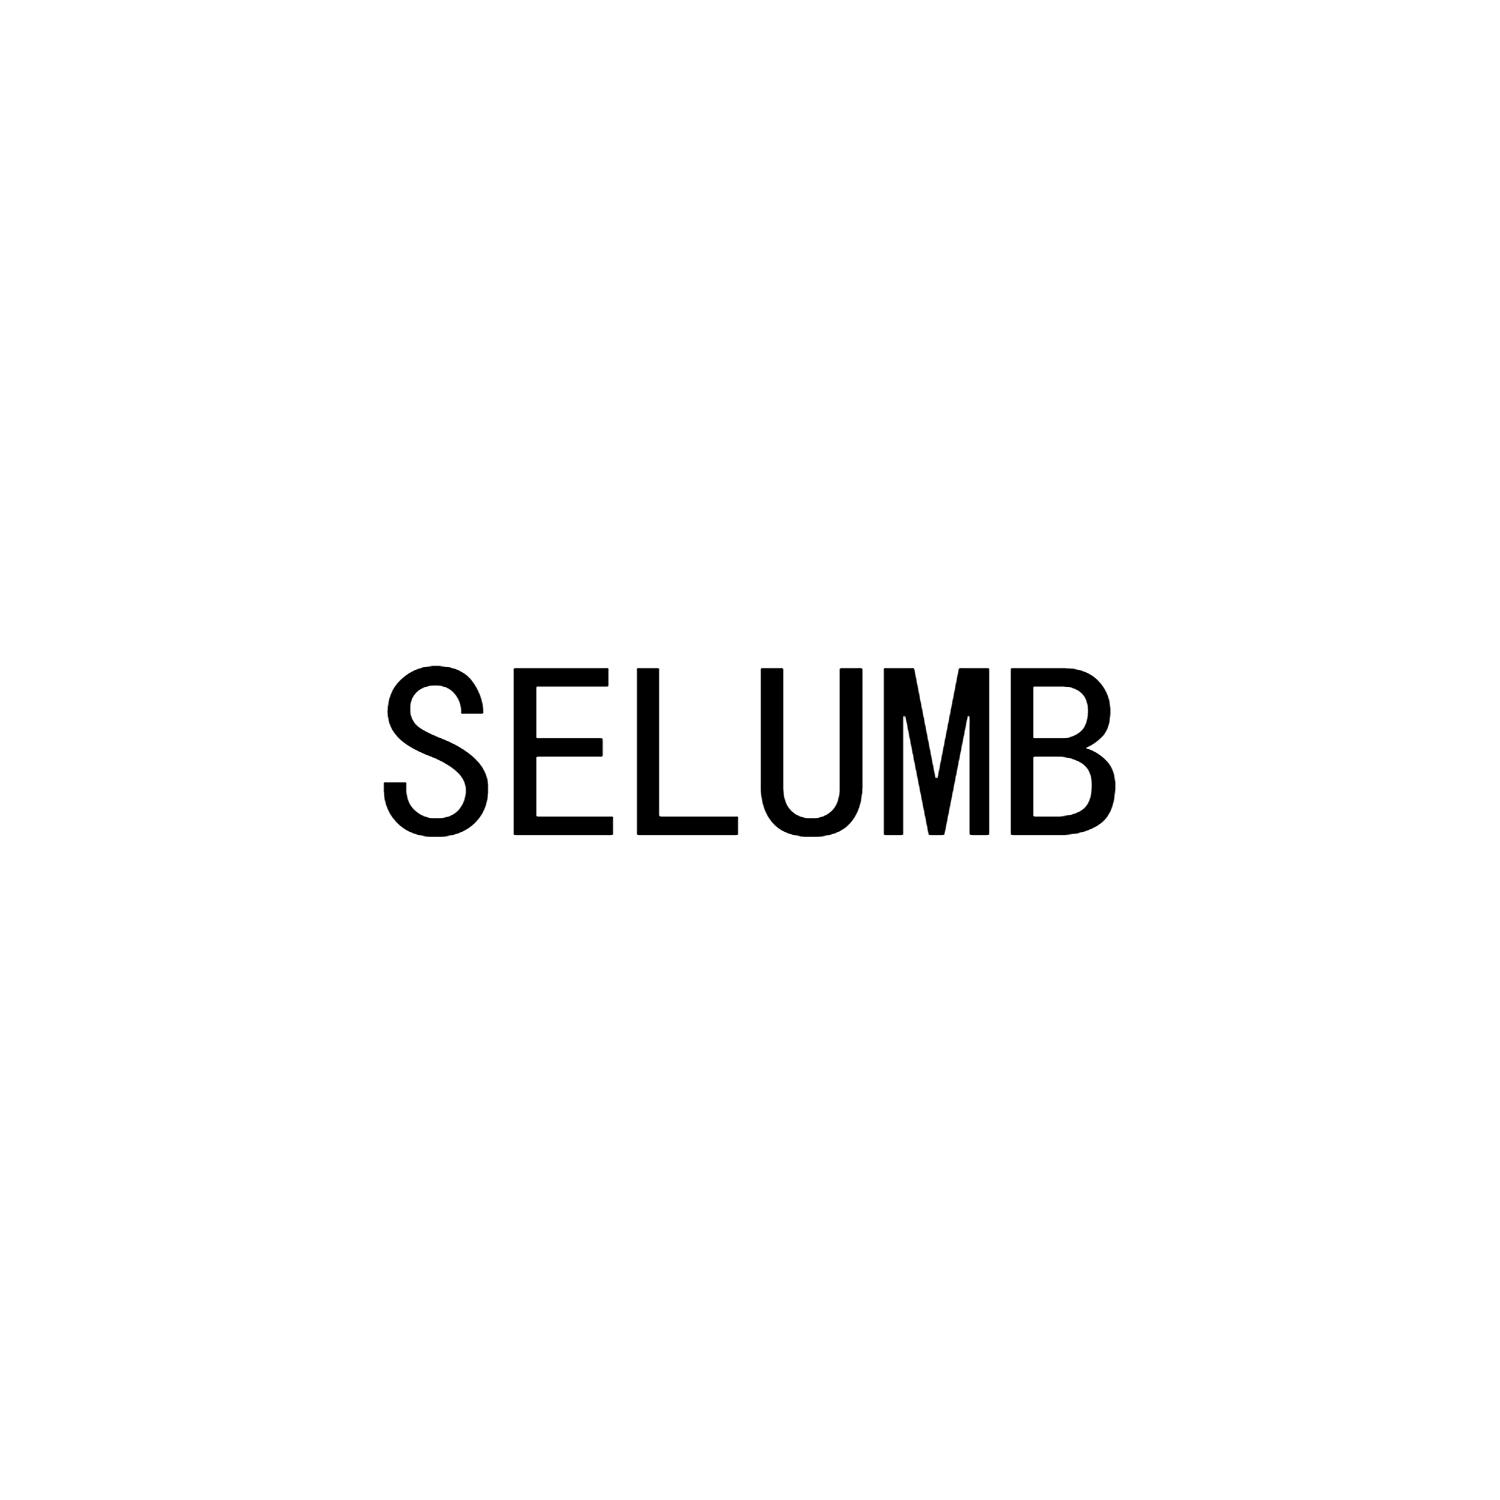 SELUMB商标转让